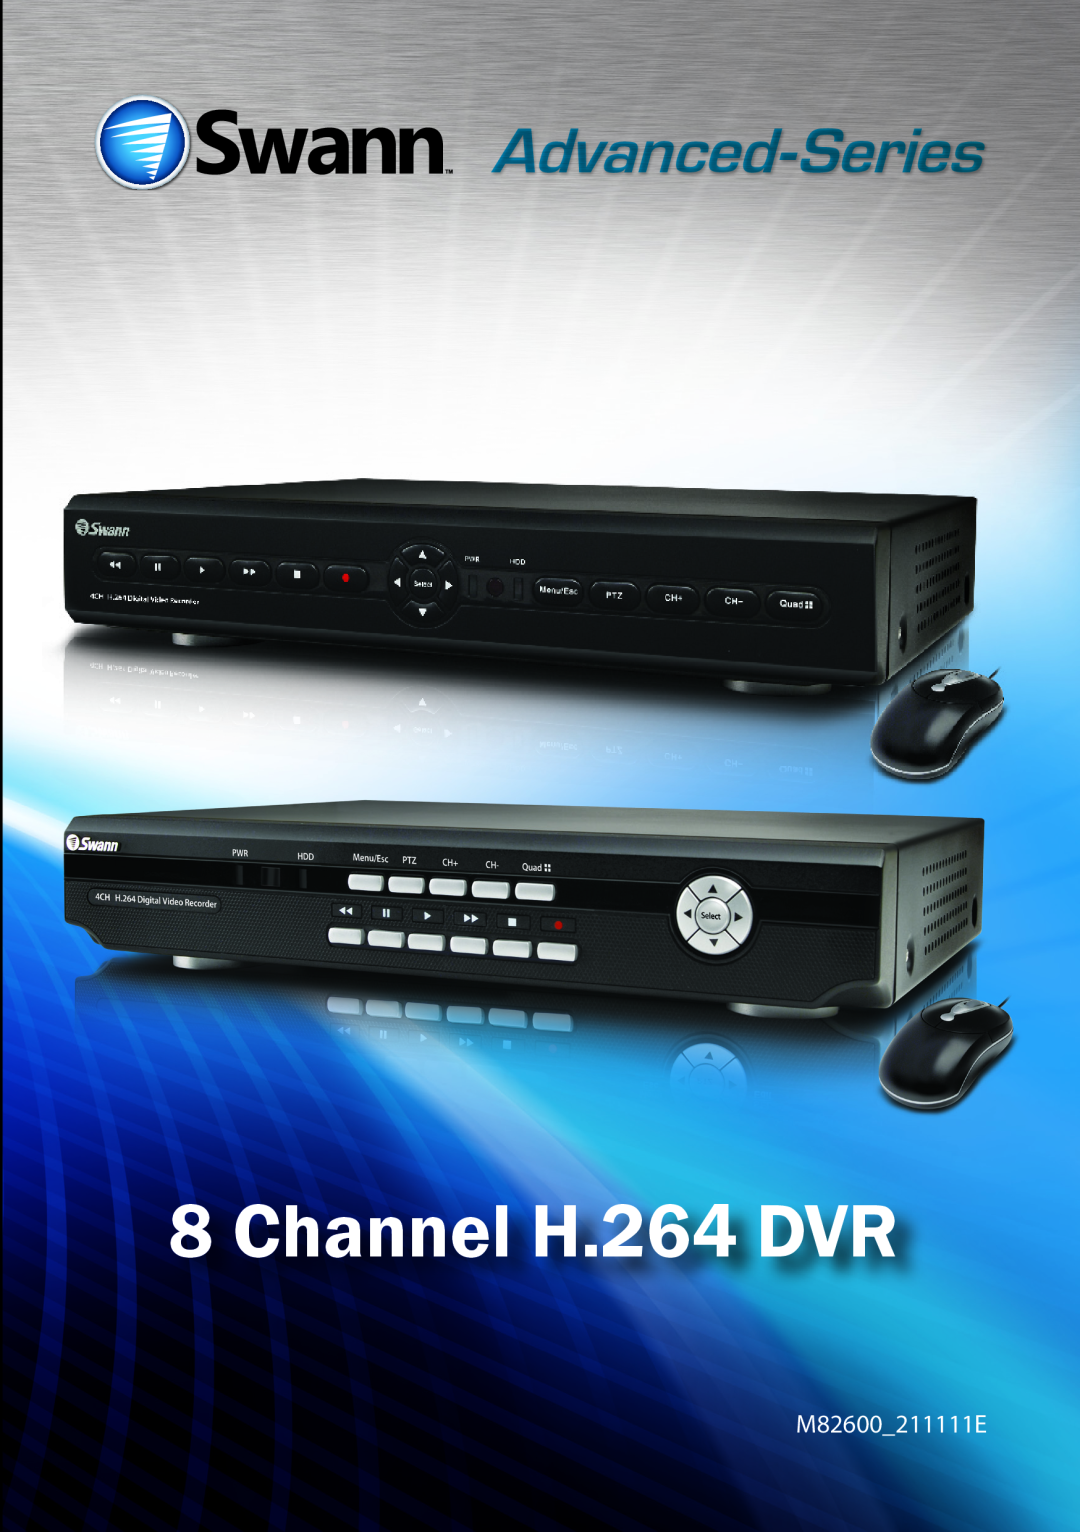 Swann manual English, 4 or 8 Channel H.264 DVR 